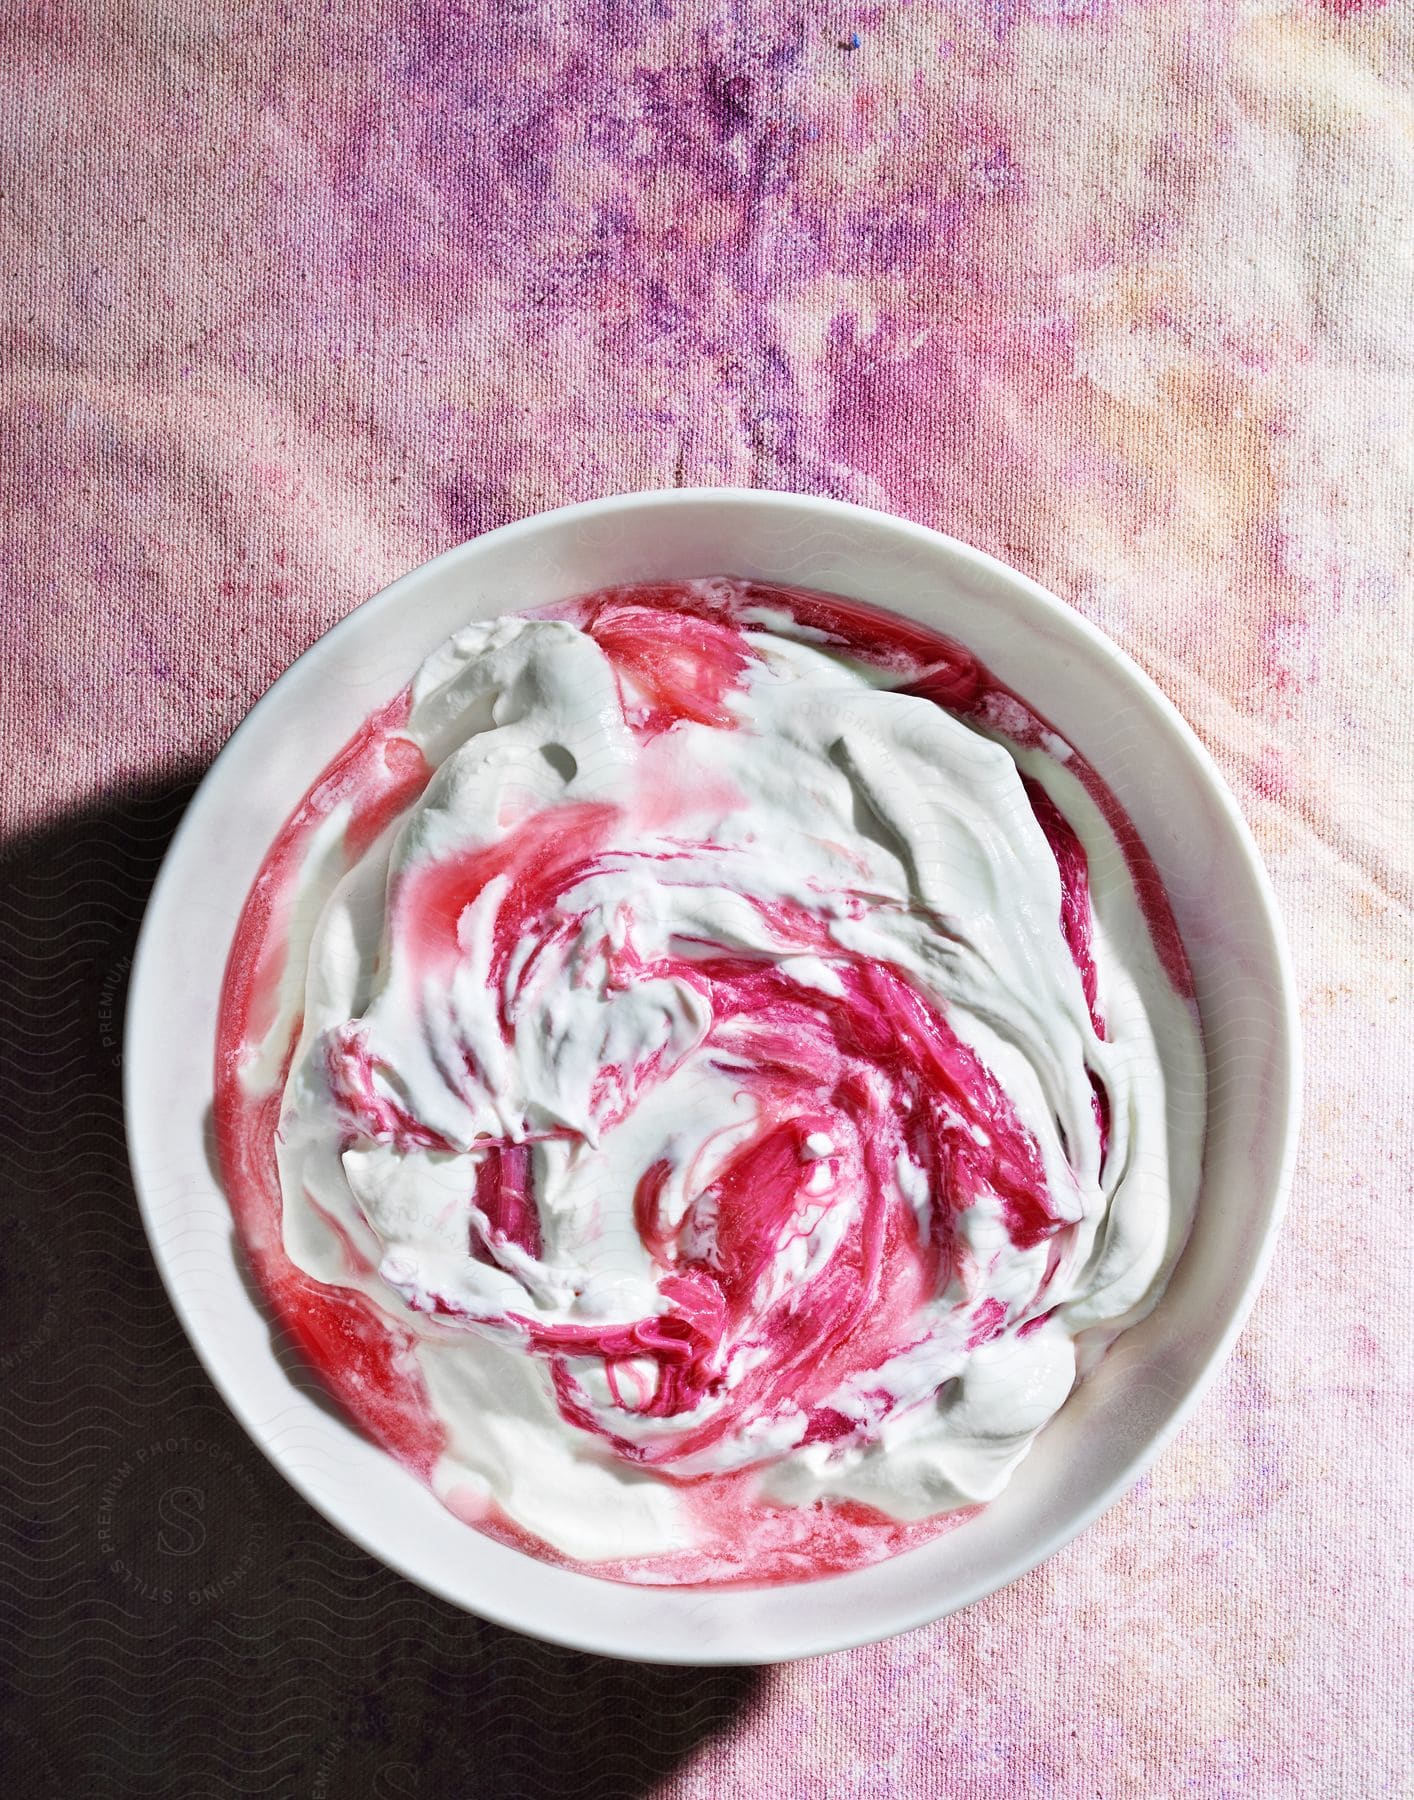 Frozen raspberry and vanilla dessert in a white ramekin on a pastel table cloth